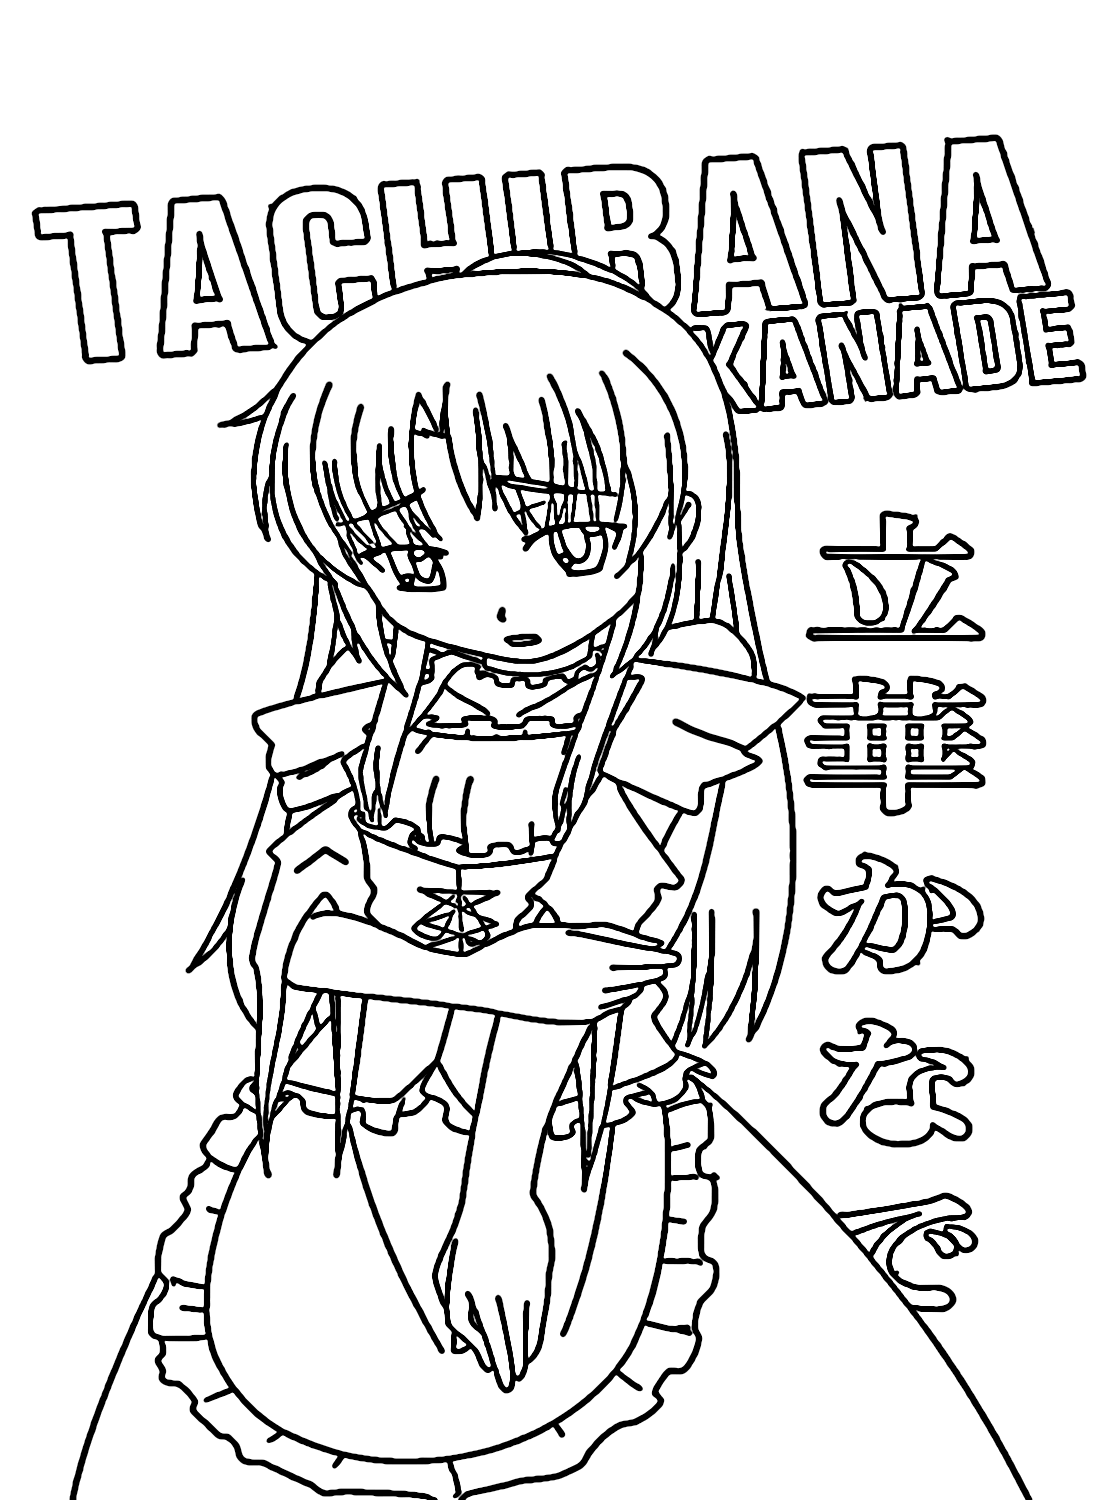 Kanade Tachibana Malblatt von Kanade Tachibana